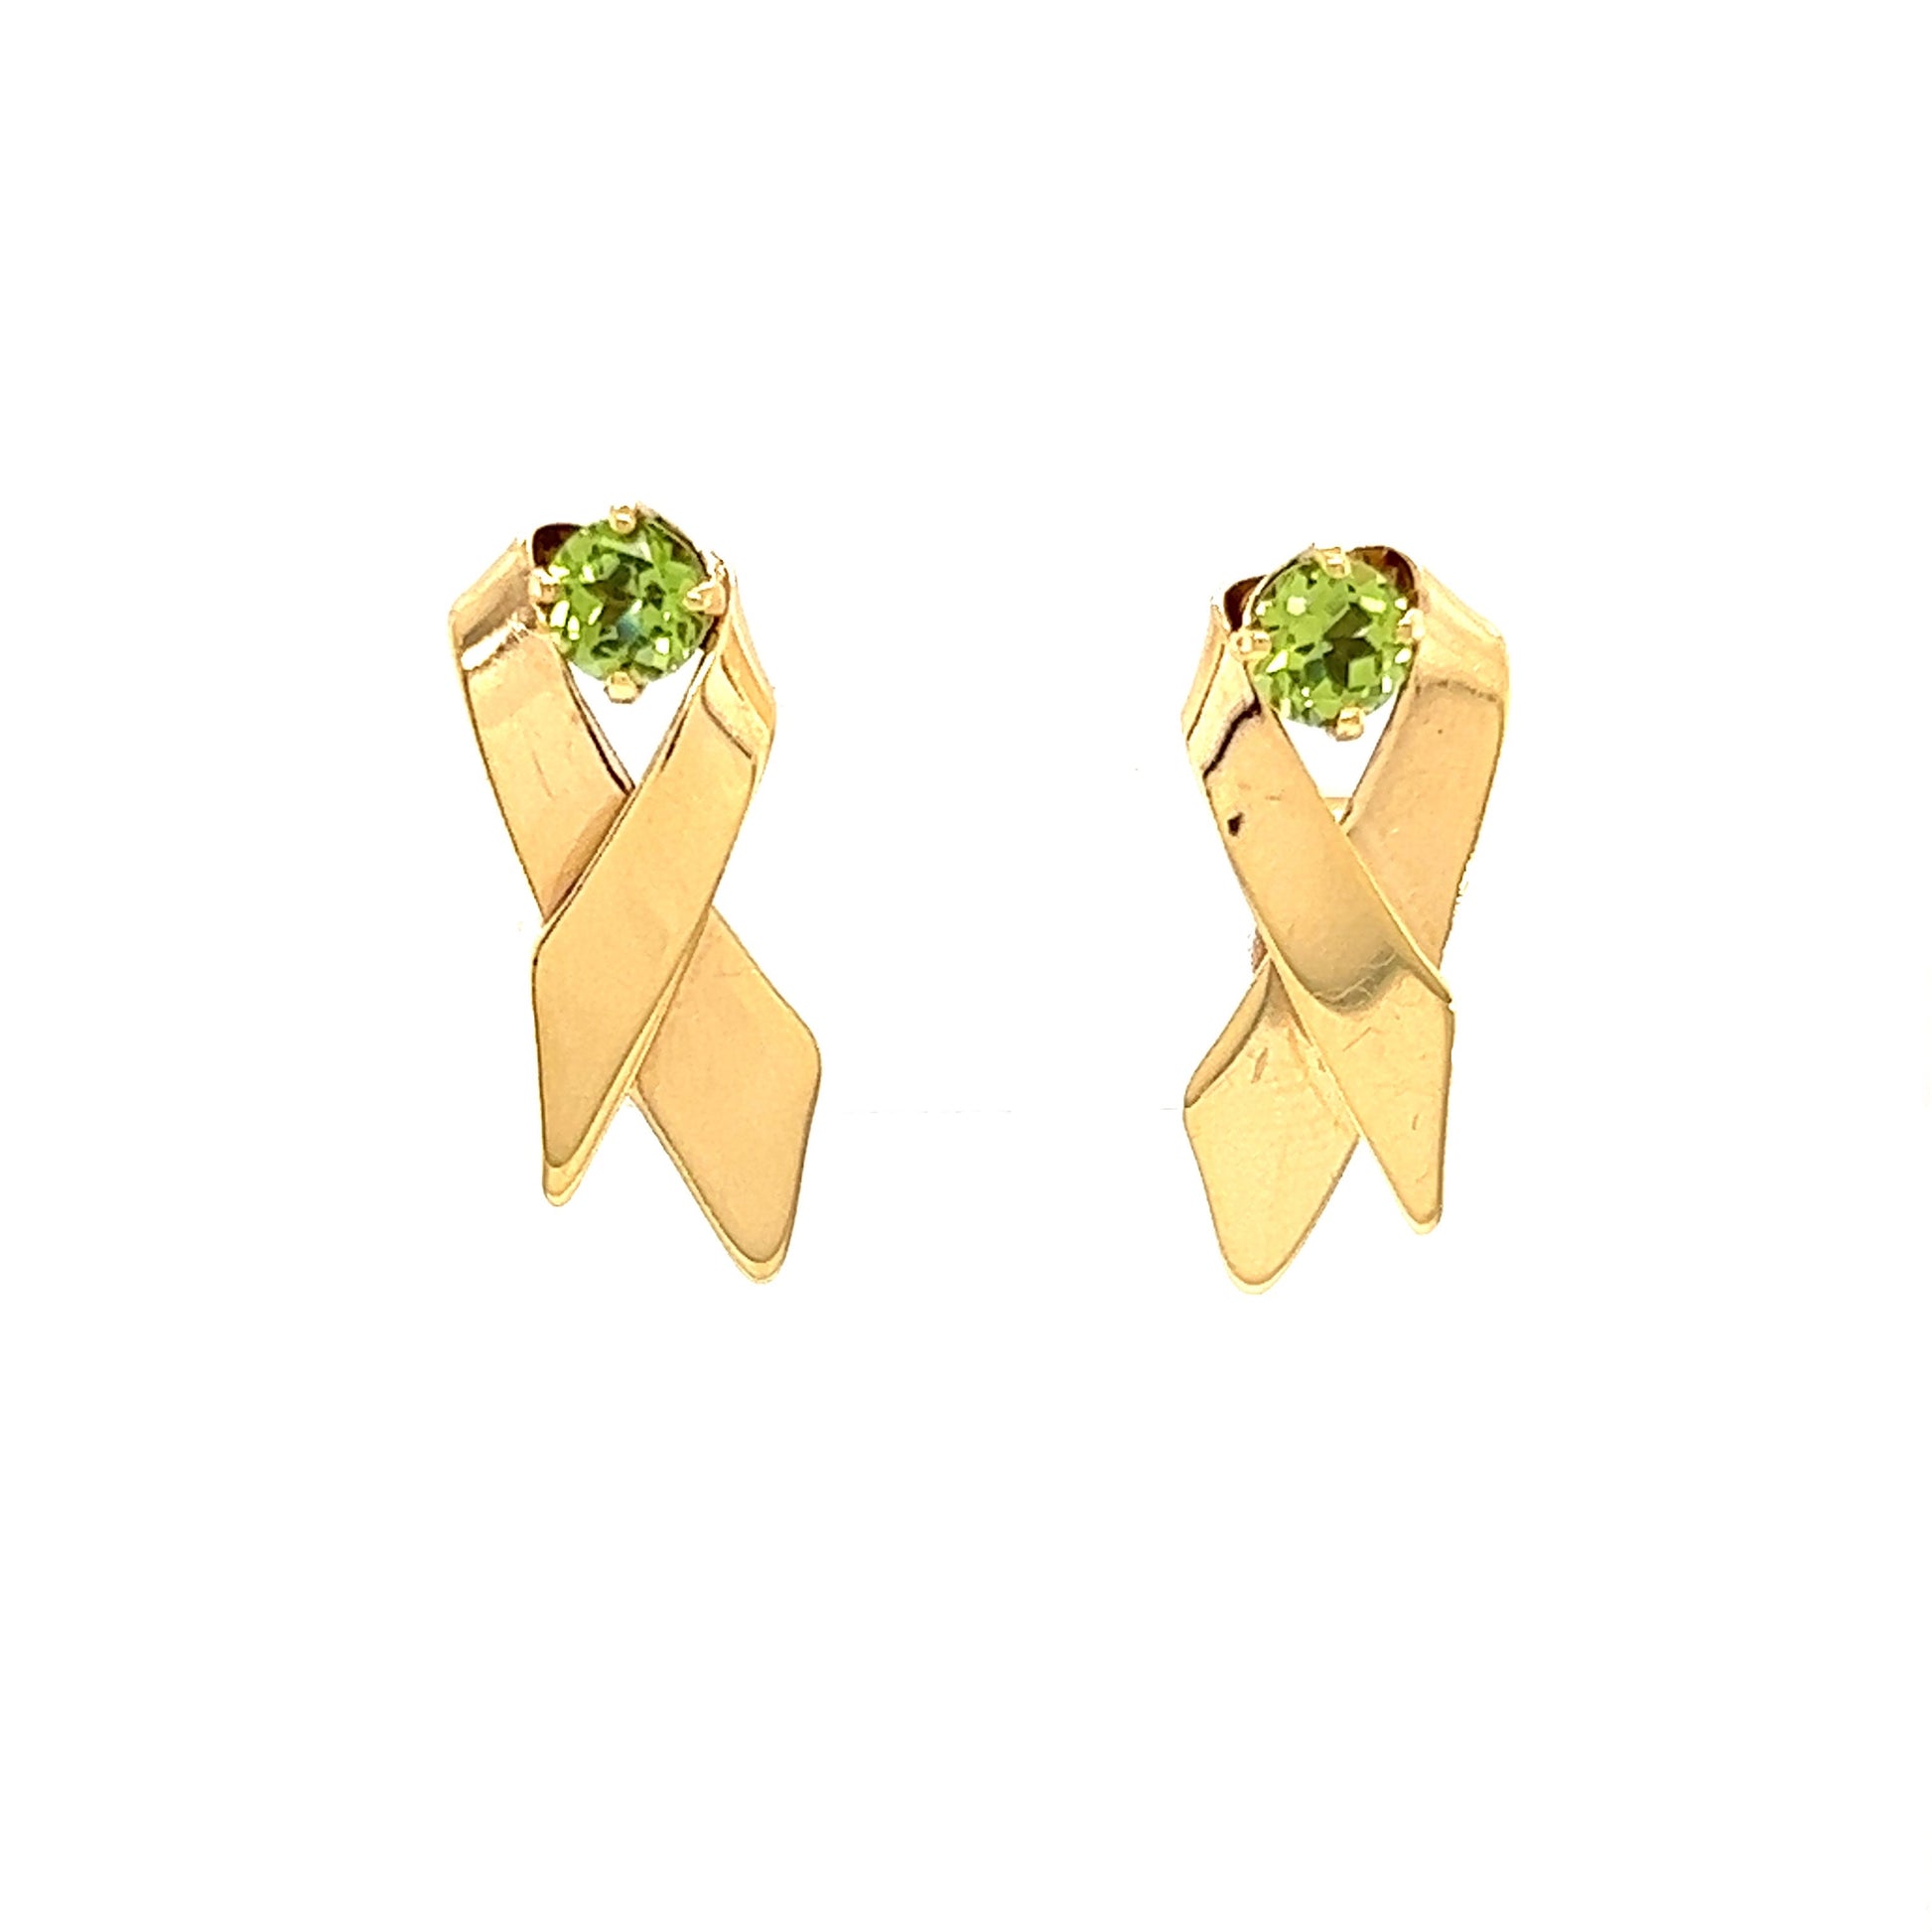 Ribbon Peridot Stud Earrings in 14K Yellow Gold Front View